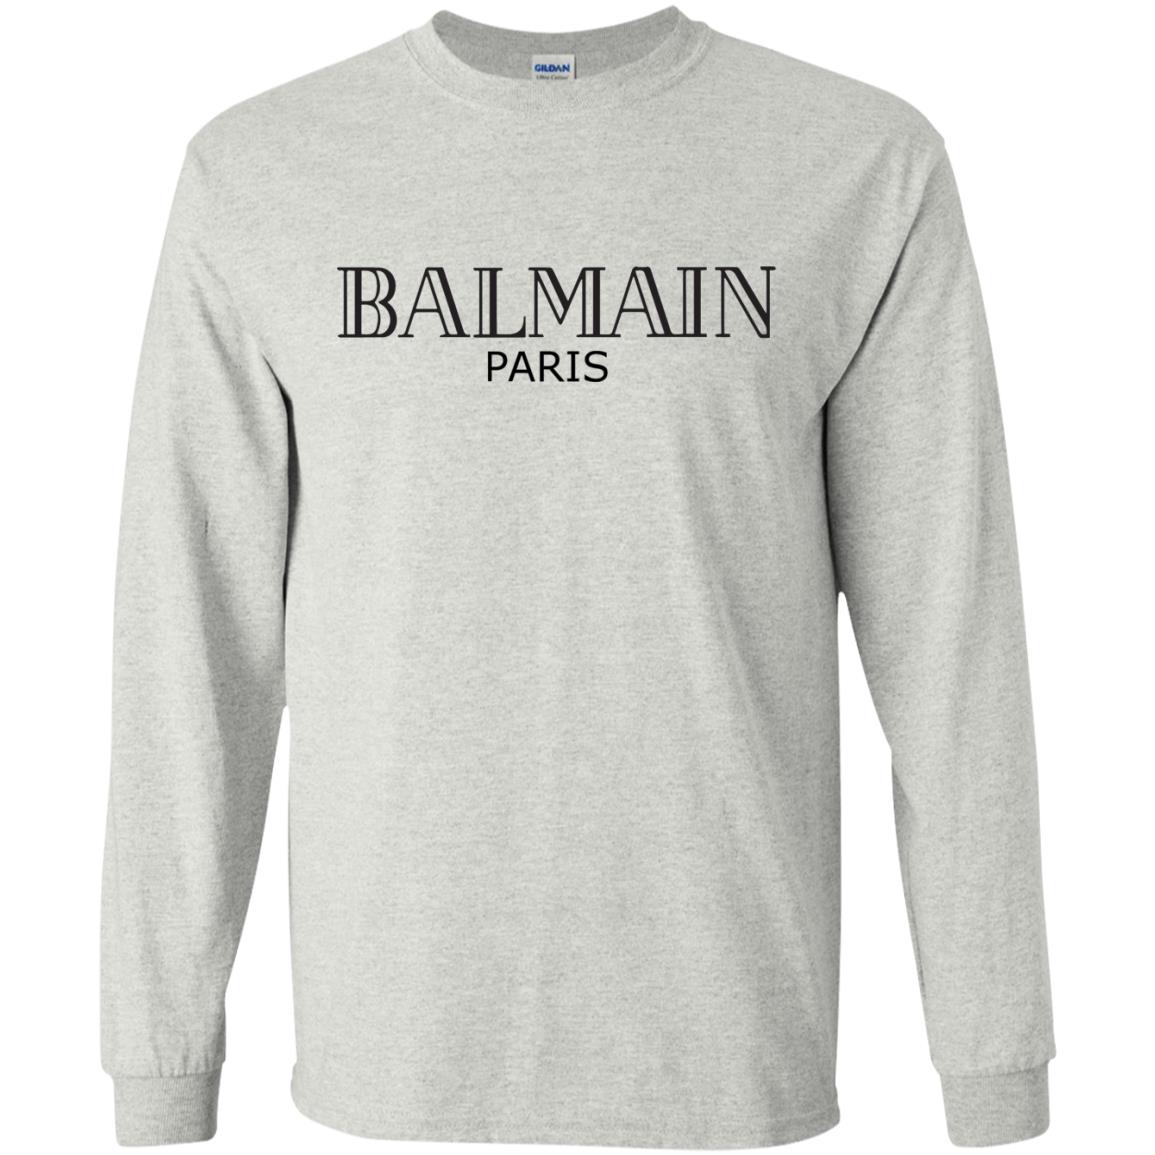 Balmain Paris t shirt, long sleeve, hoodie - RobinPlaceFabrics